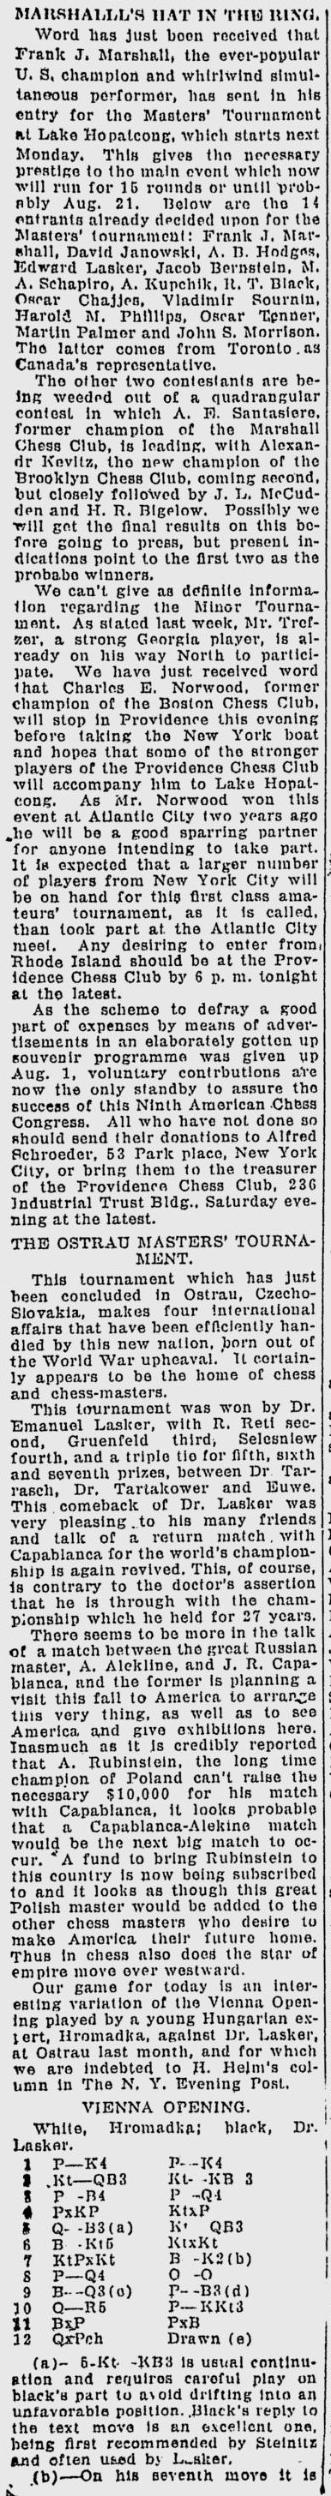 1923.08.04-02 Providence News.jpg